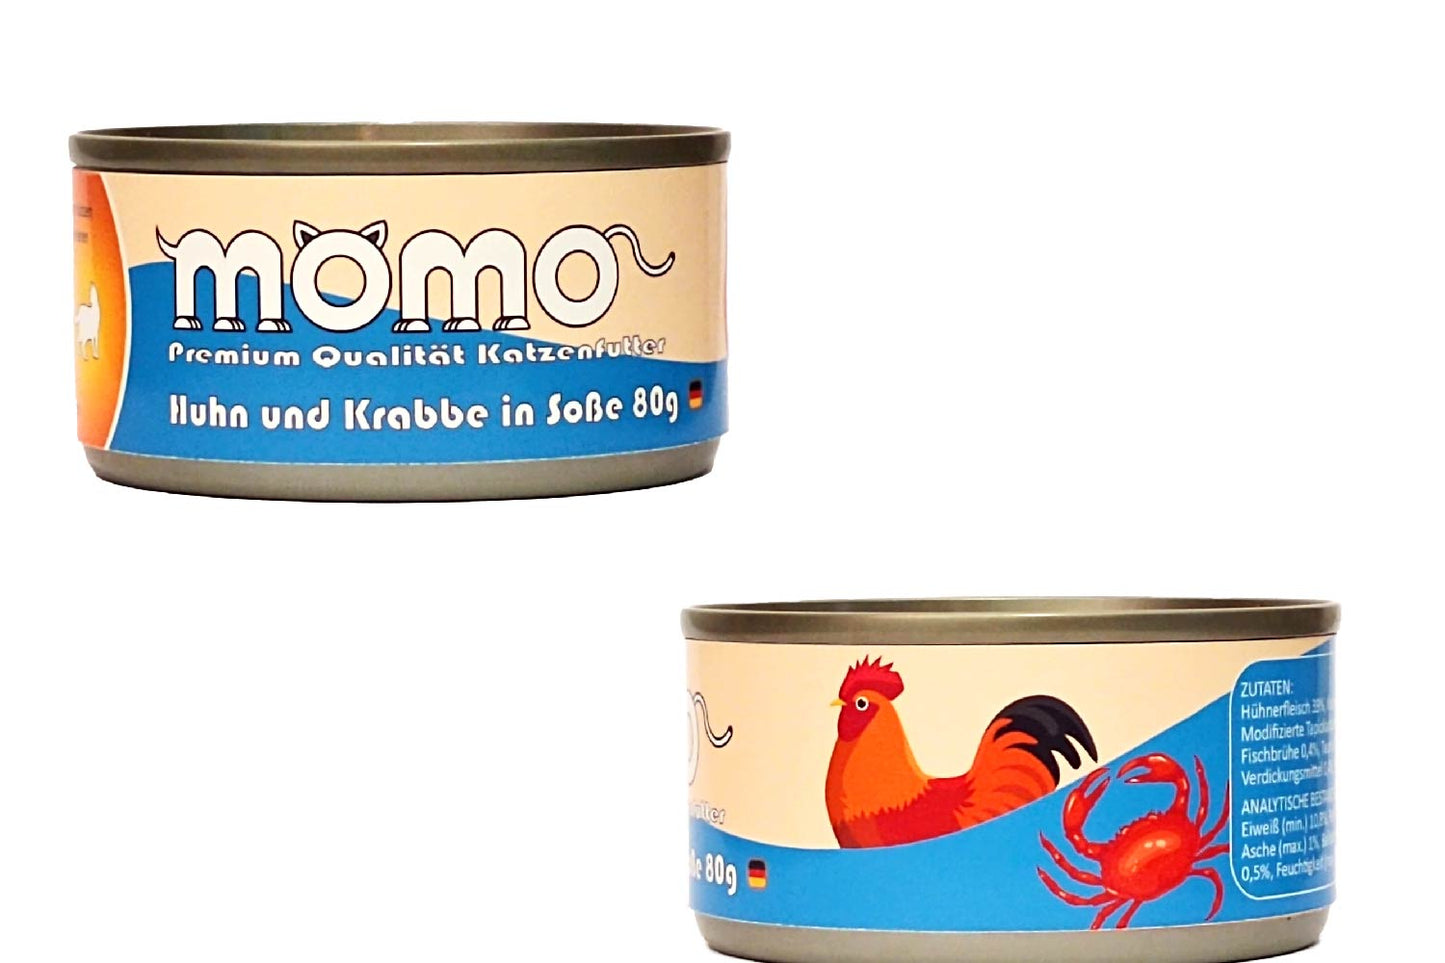 Momo 肉汁系列組合 80g x 24罐